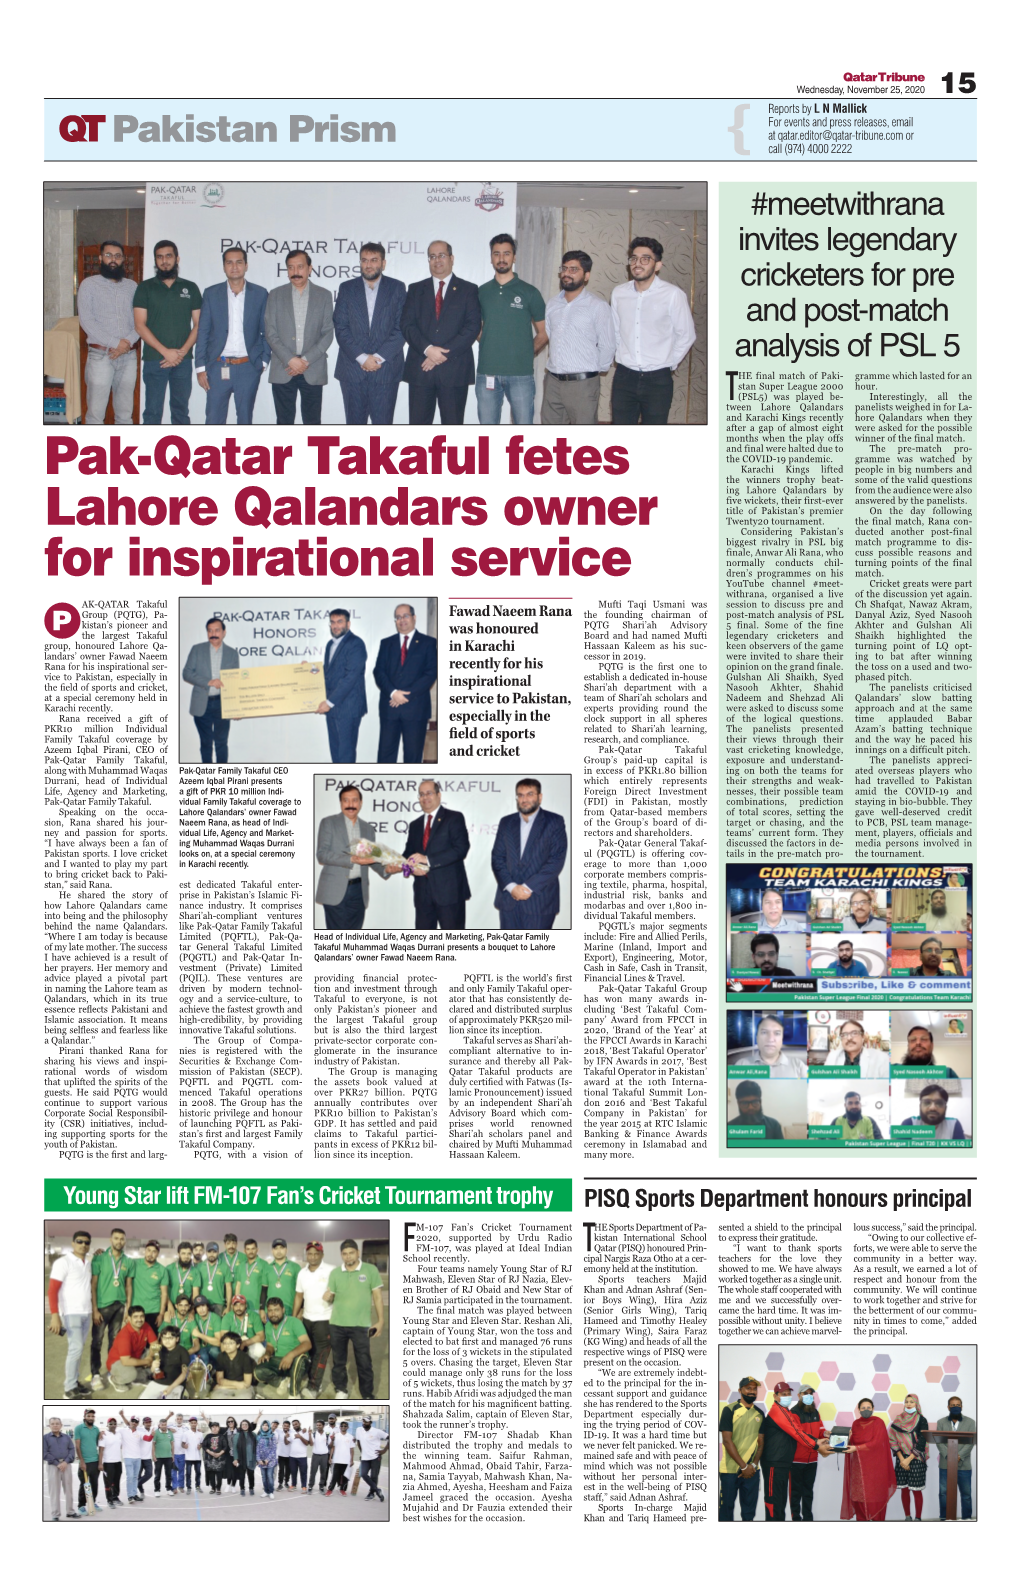 Pak-Qatar Takaful Fetes Lahore Qalandars Owner for Inspirational Service